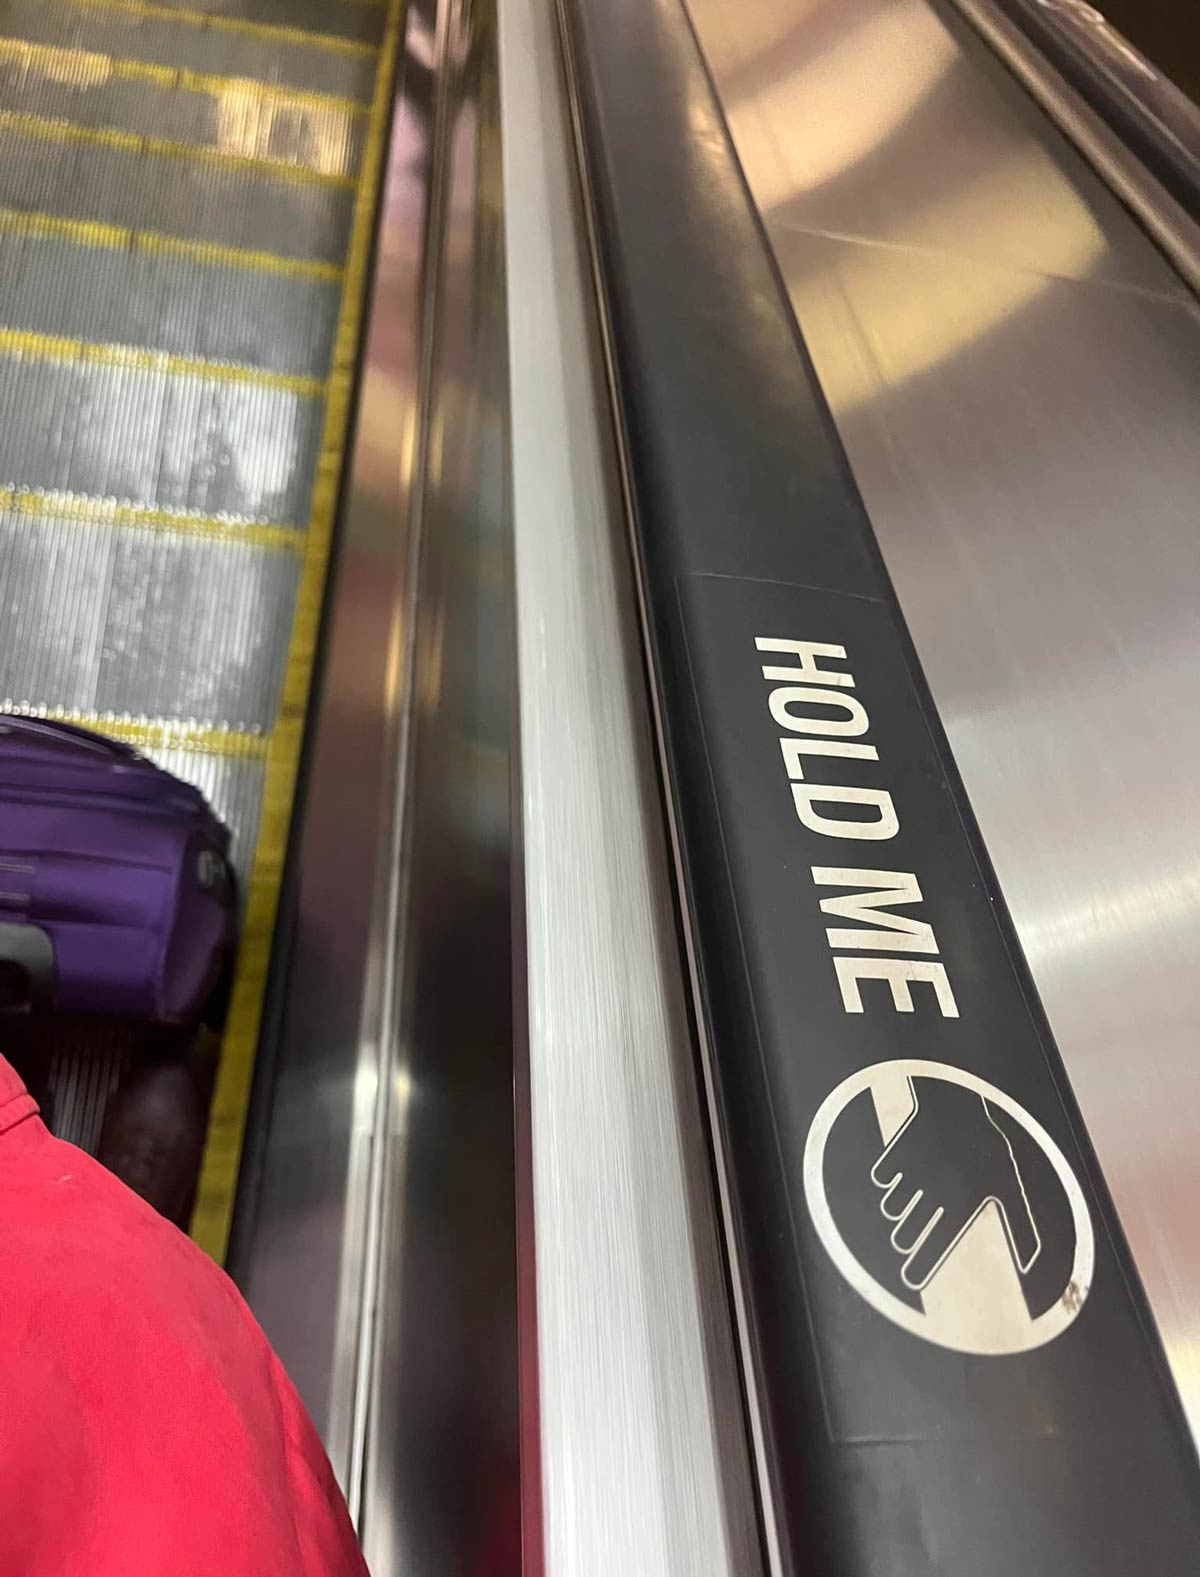 The escalators on the London Underground are so damn needy